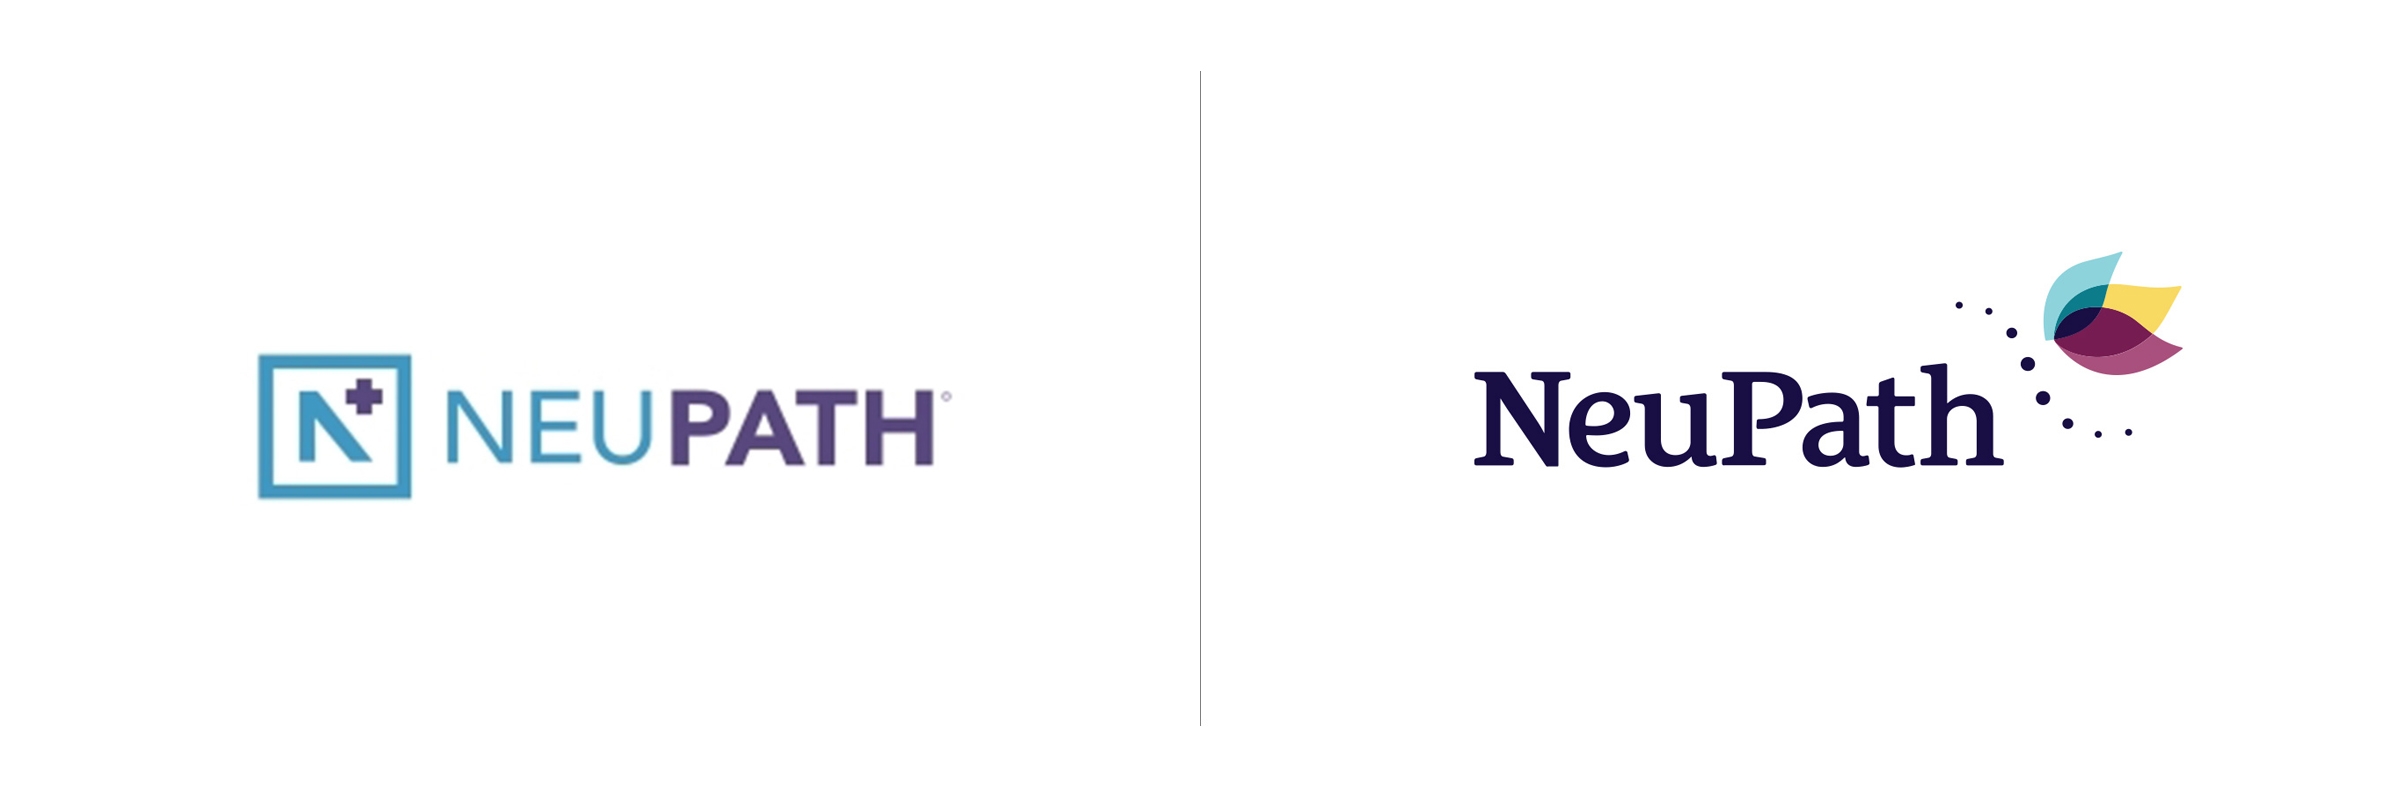 NeuPath logo redesign